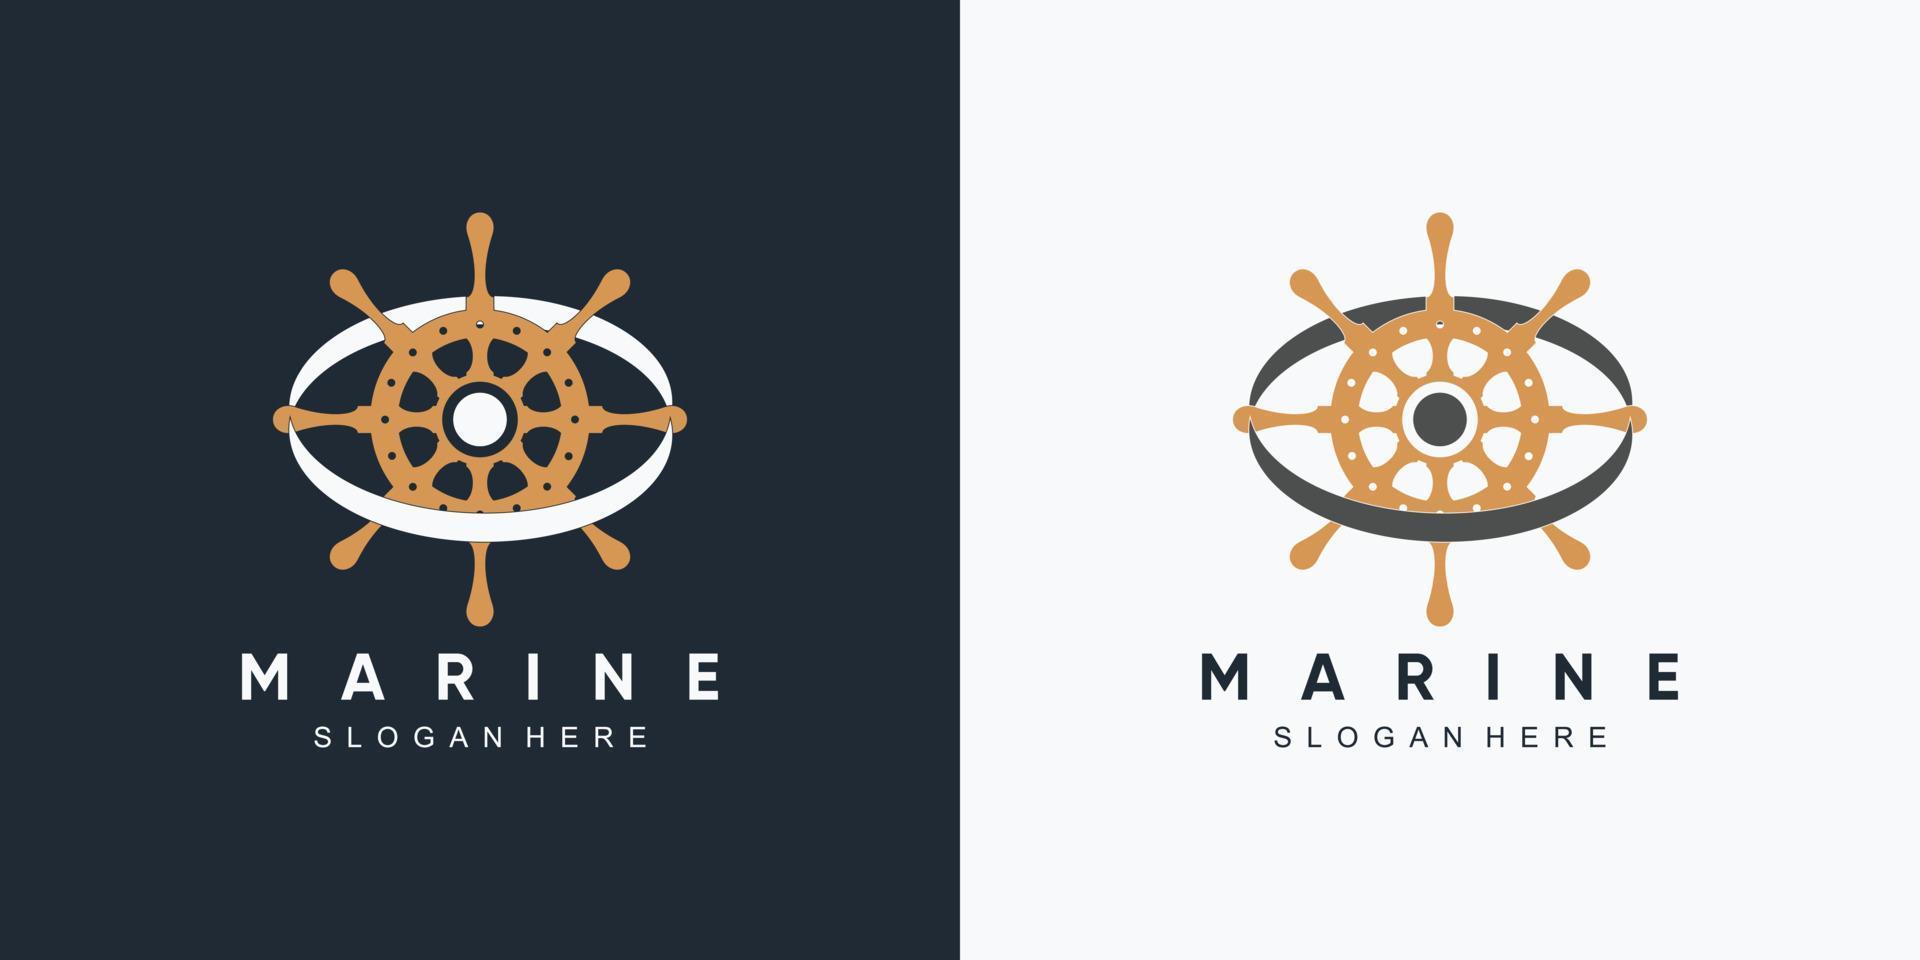 anchor marine and ship wheel icon logo design template with creative element vector